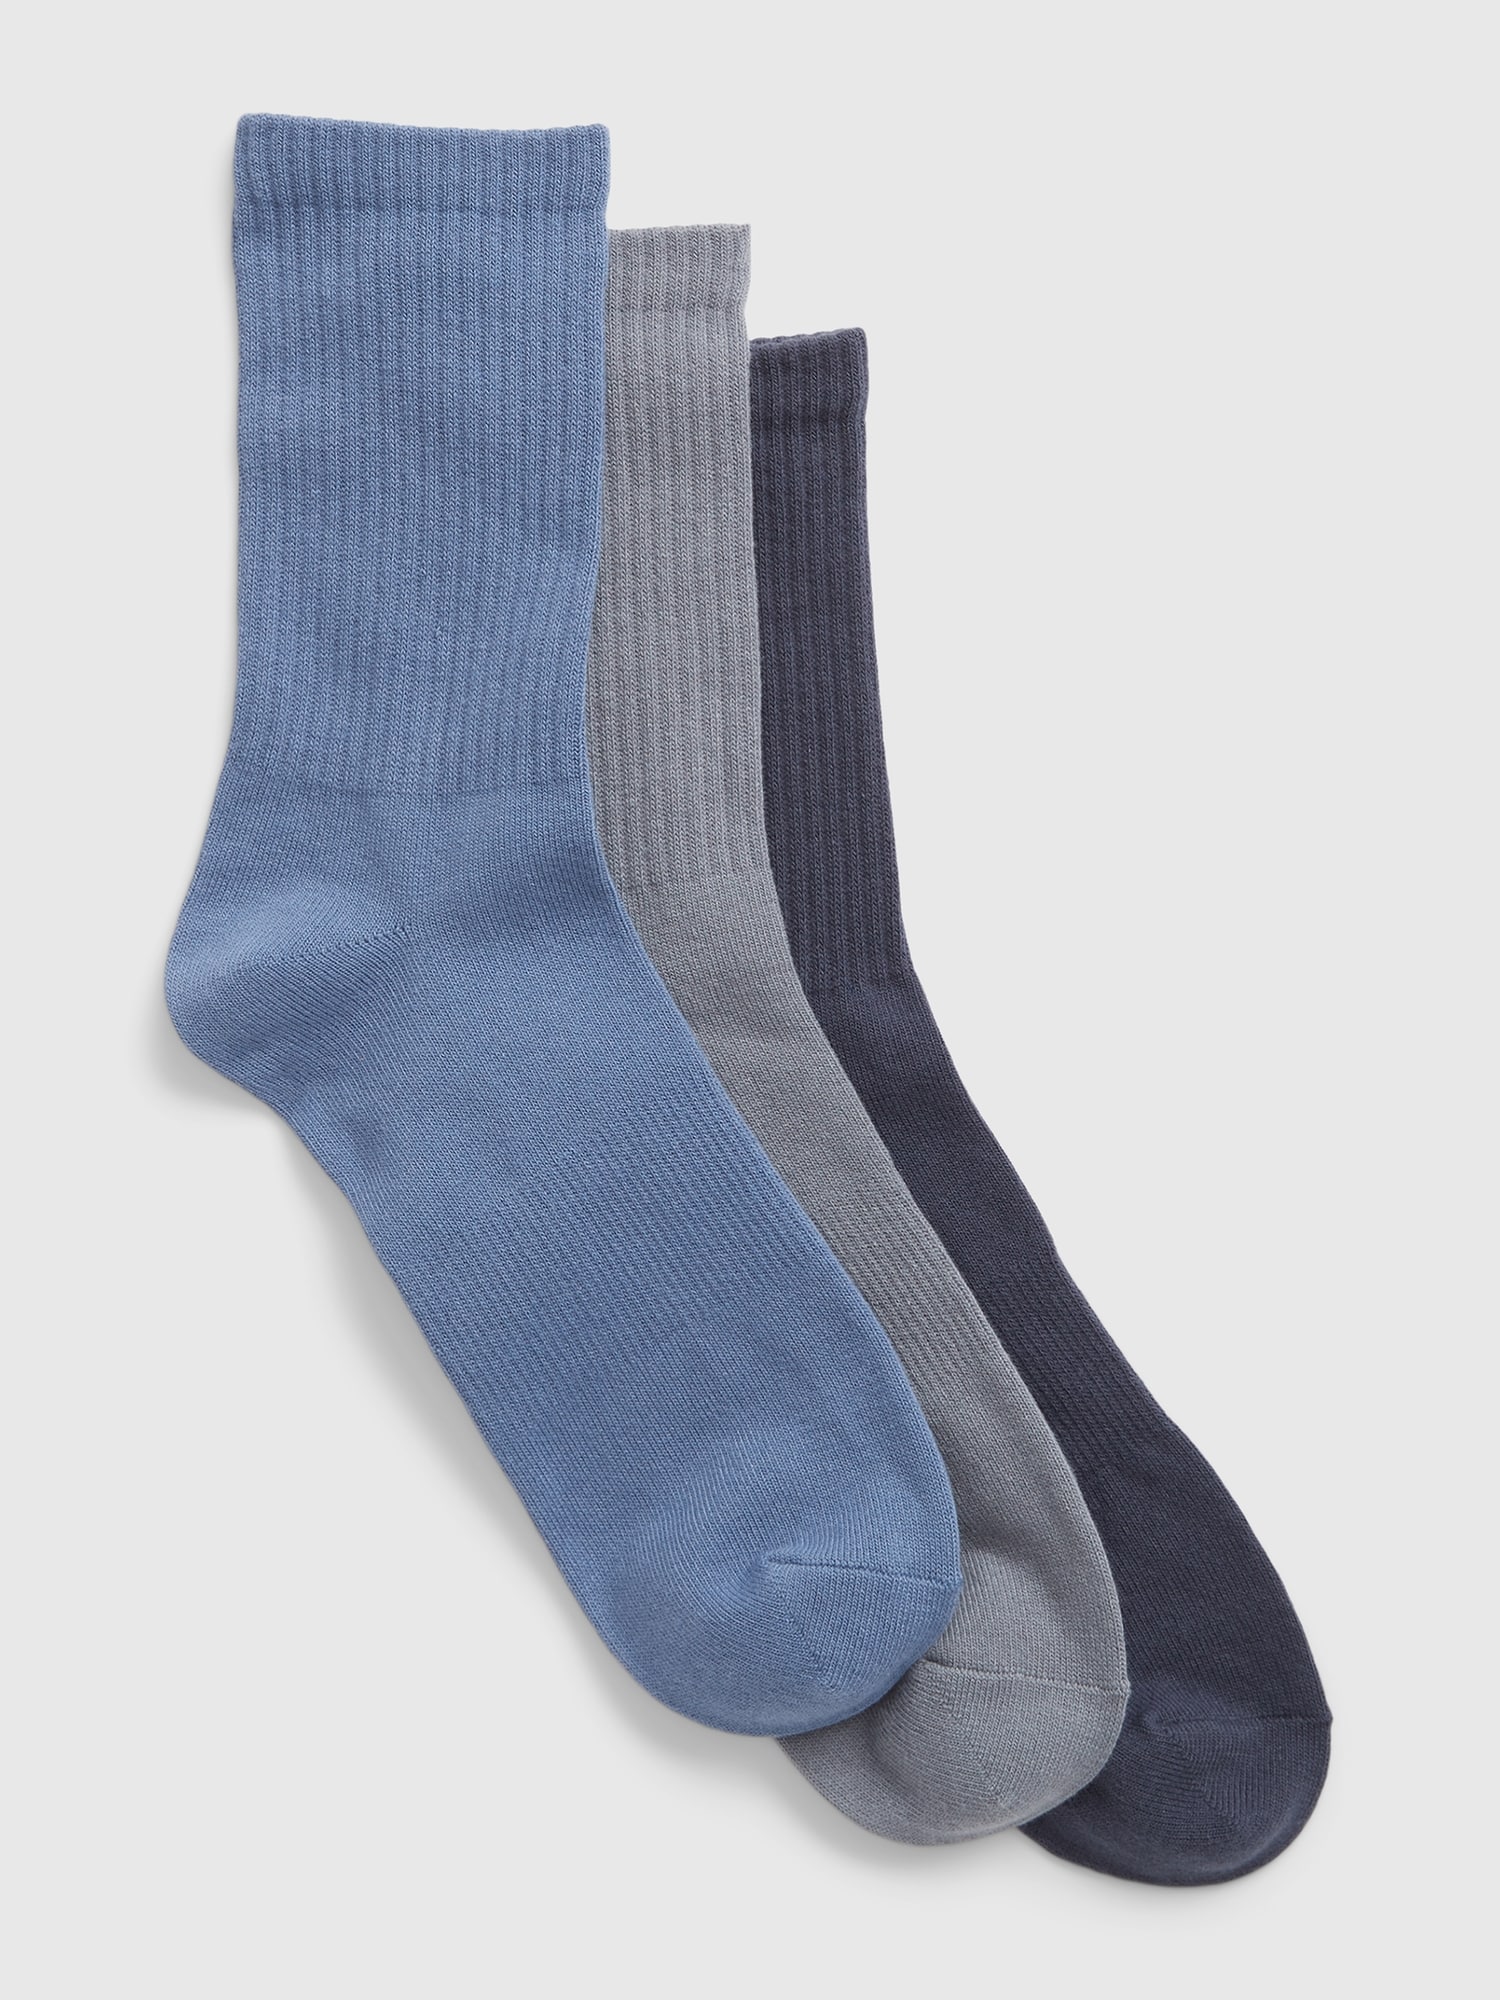 GAP High Socks, 3 Pairs - Men